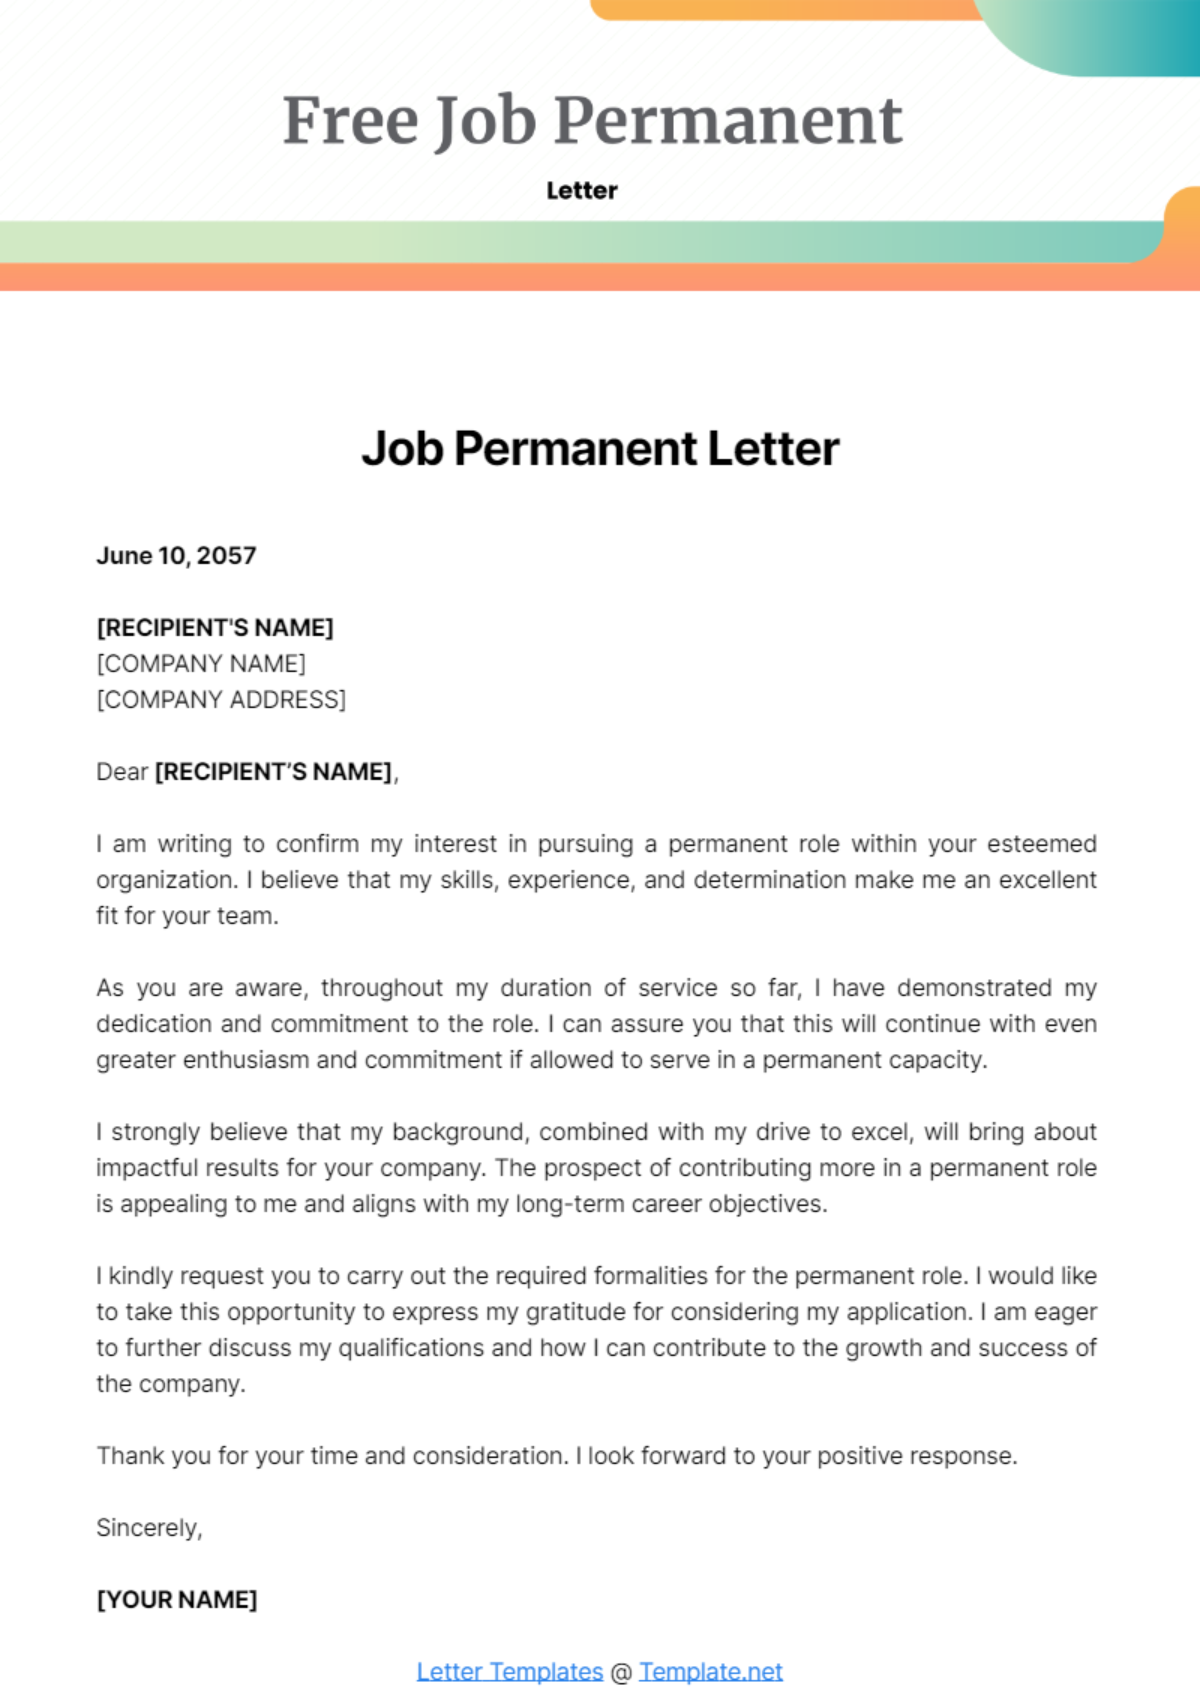 Job Permanent Letter Template